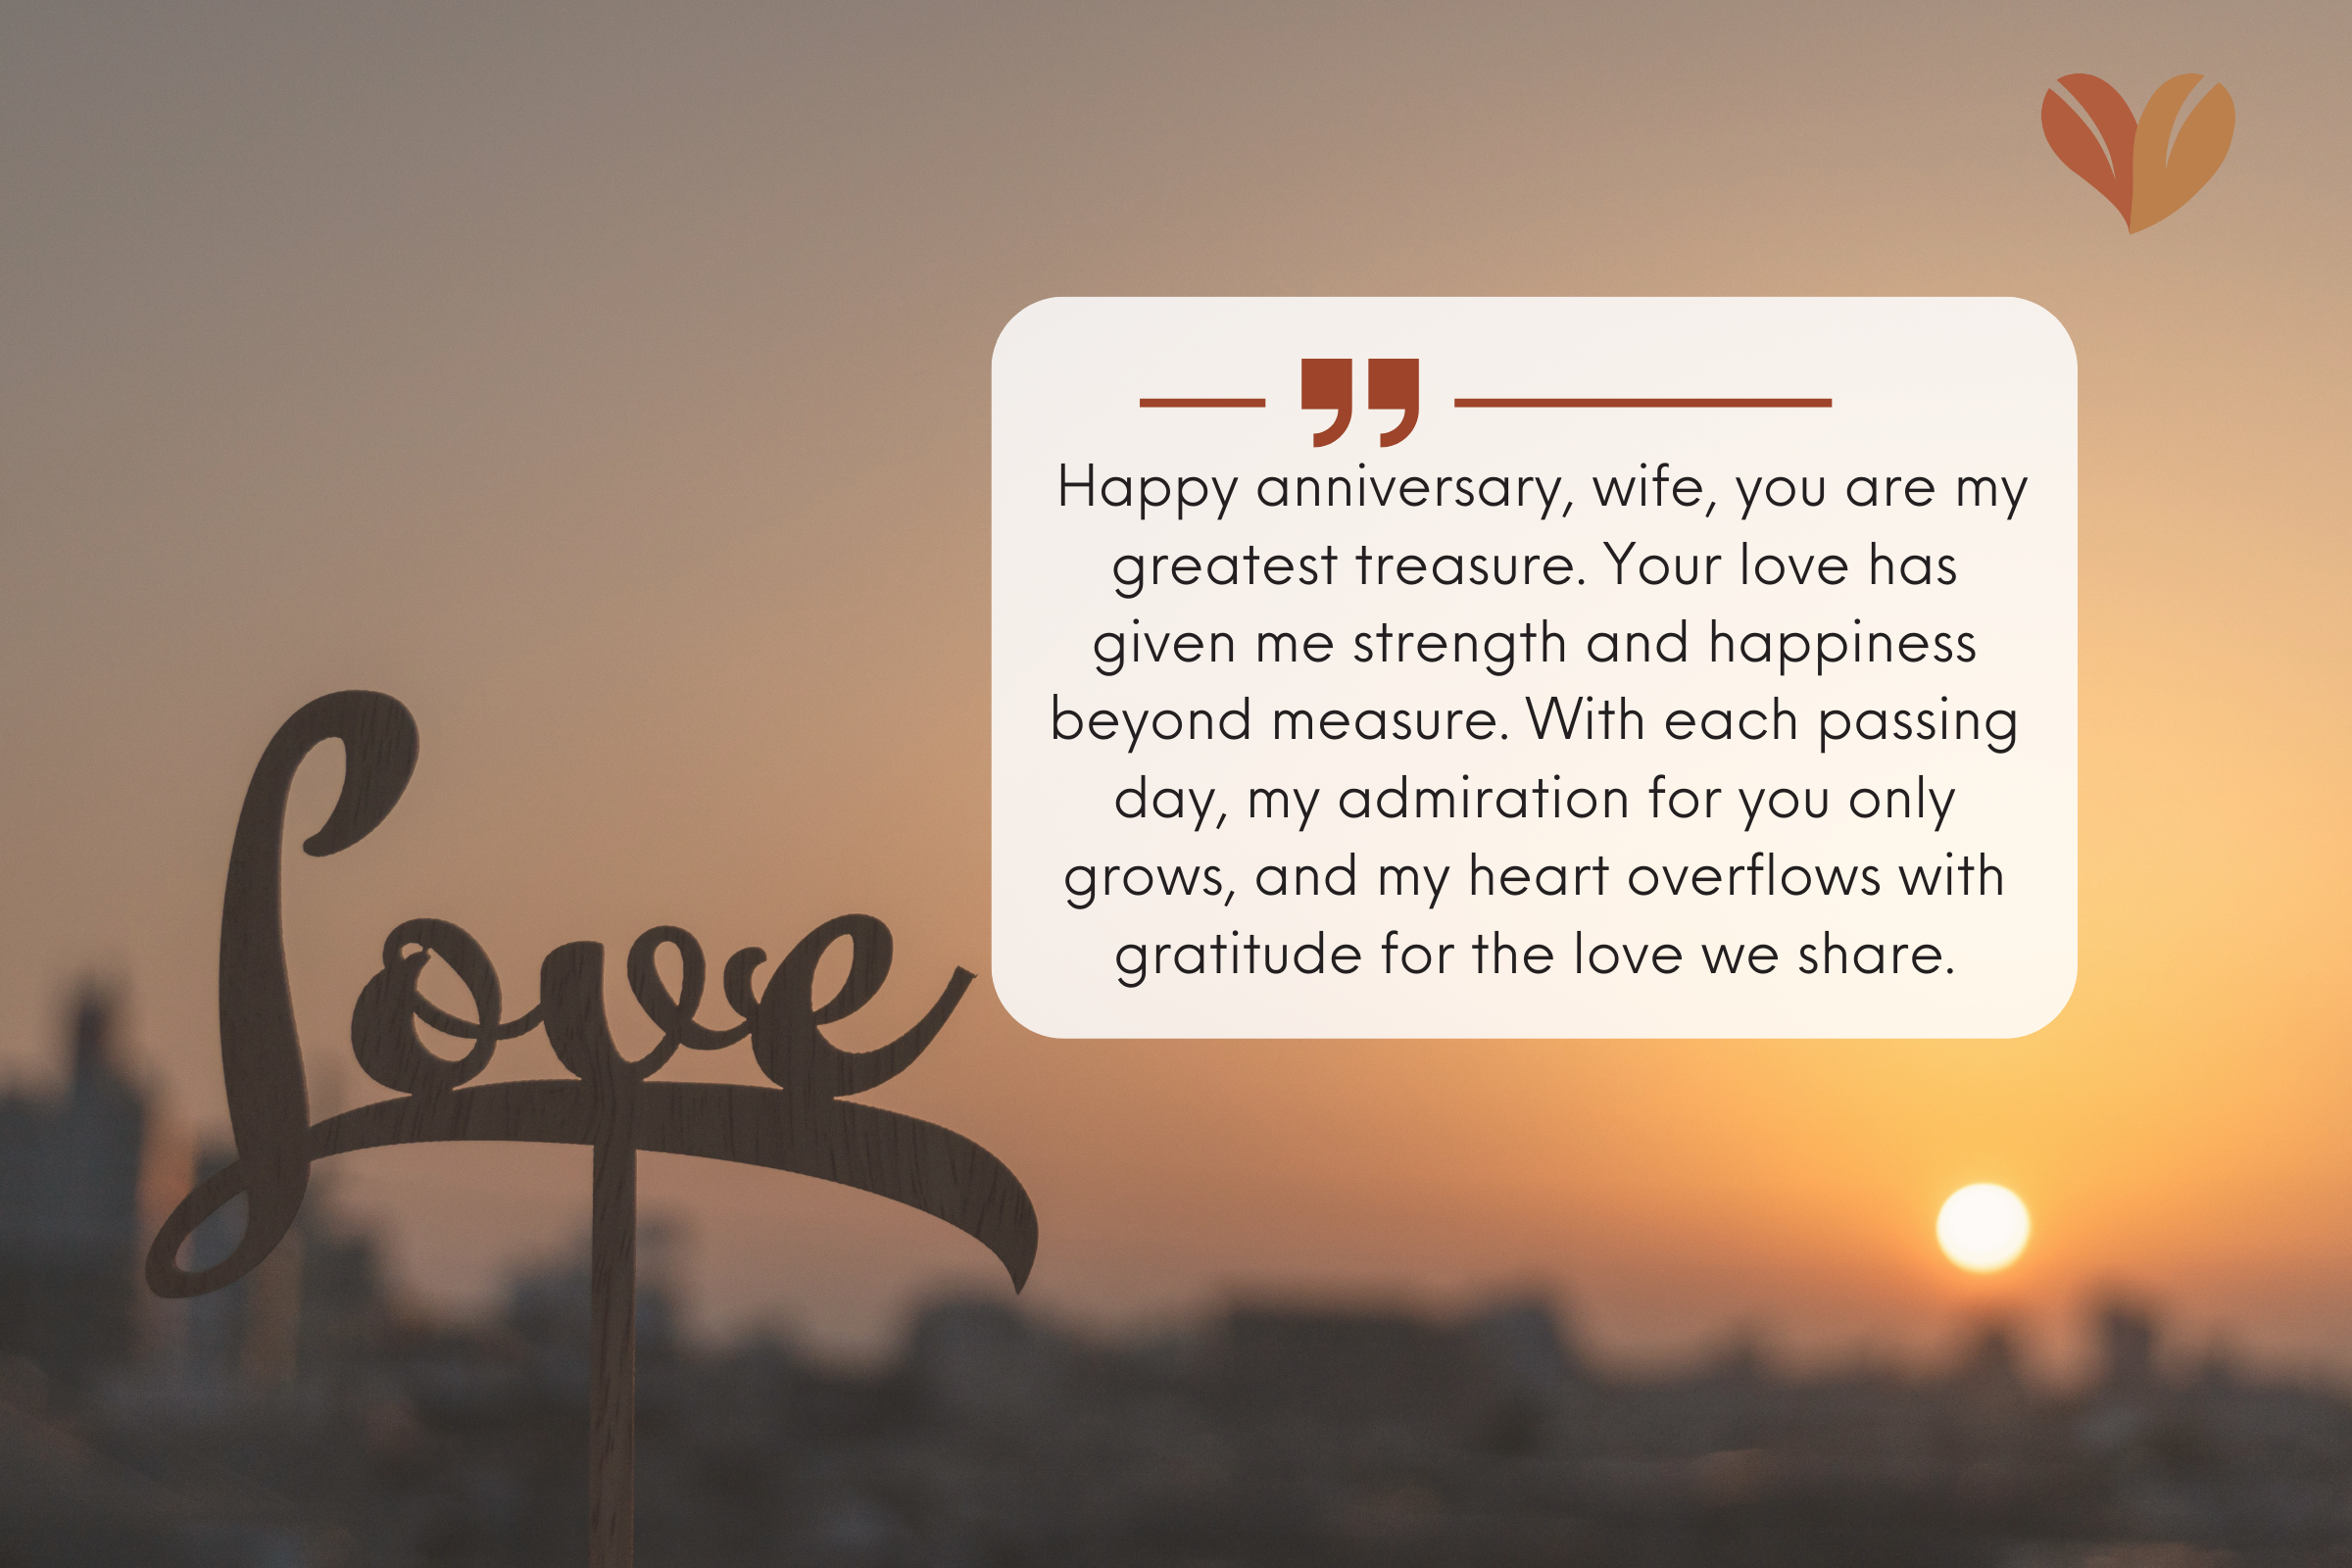 Happy anniversary wife